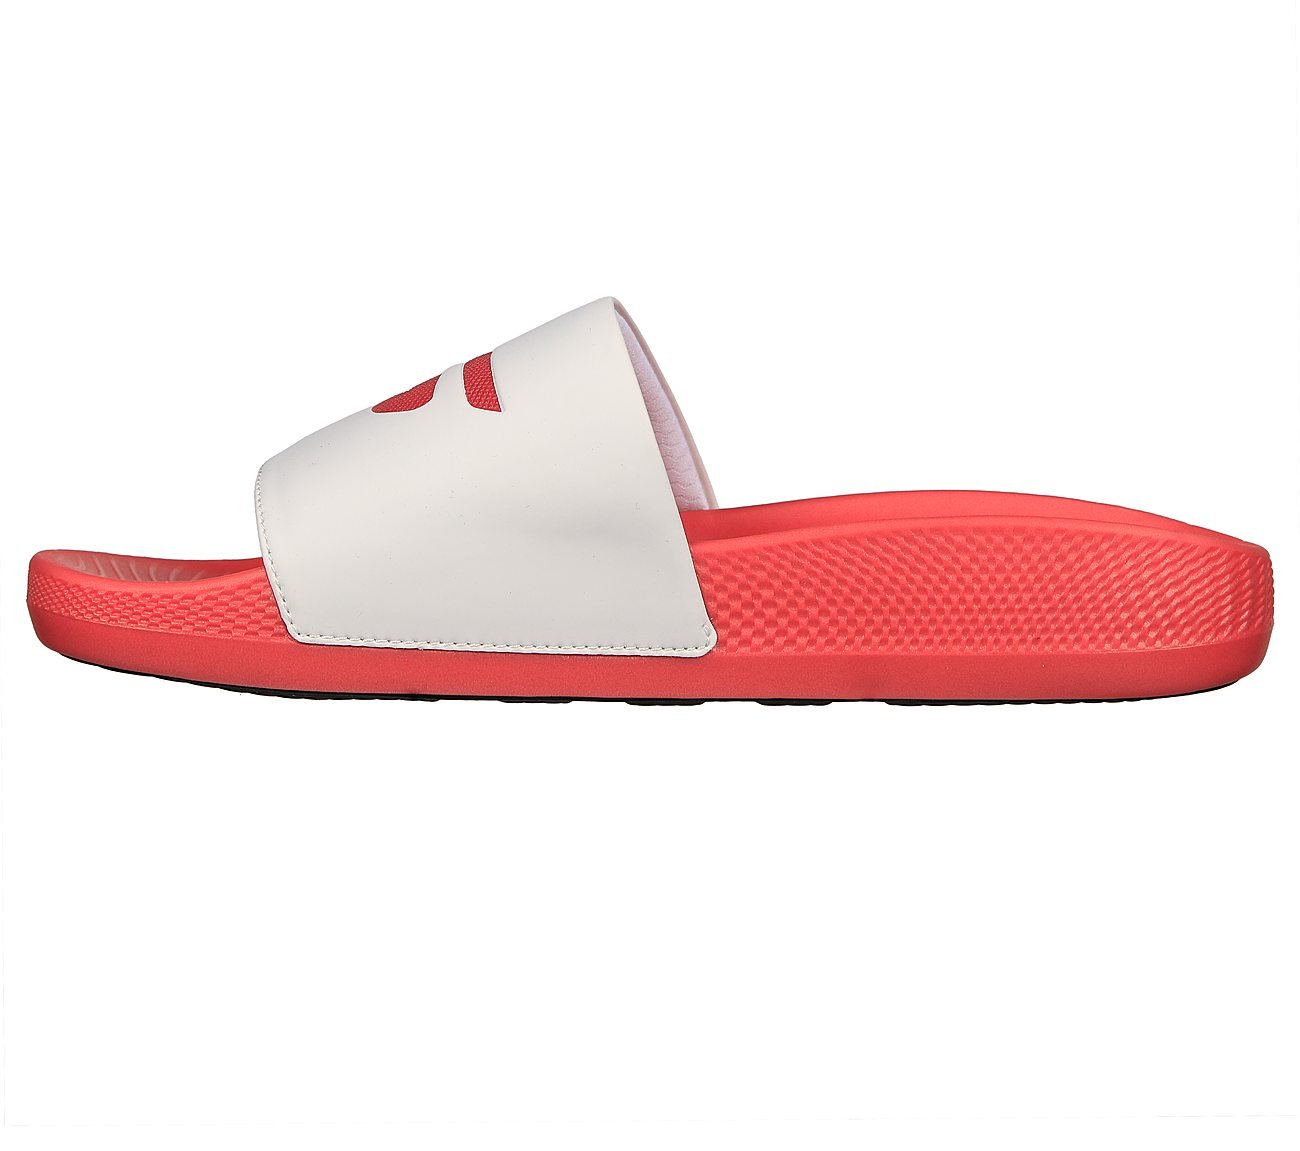 HYPER SLIDE - DERIVER, WHITE/RED Footwear Left View